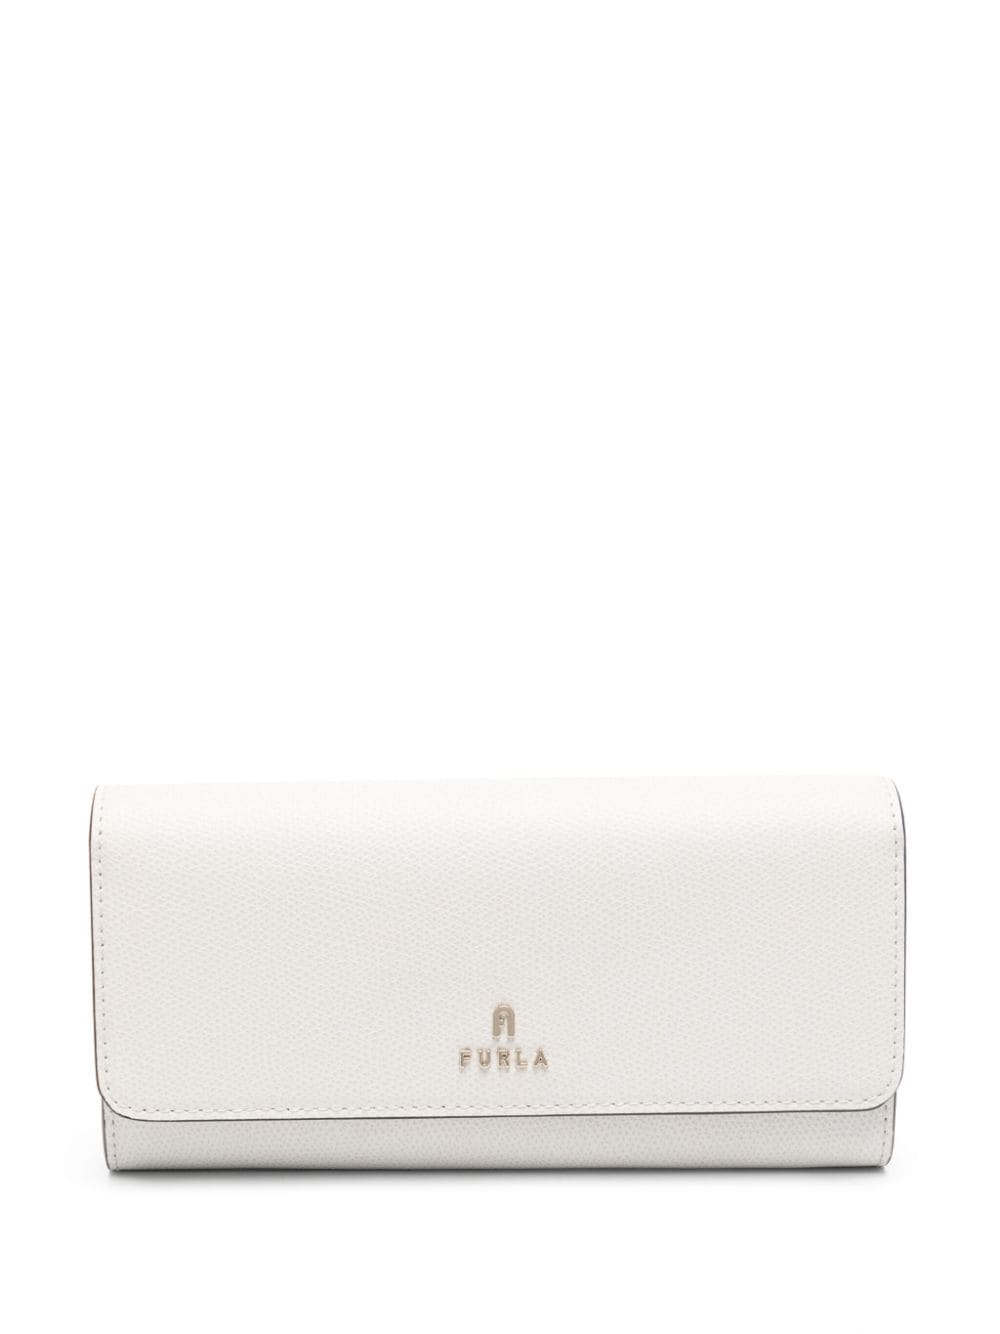 Furla Camelia continental leather wallet - White von Furla